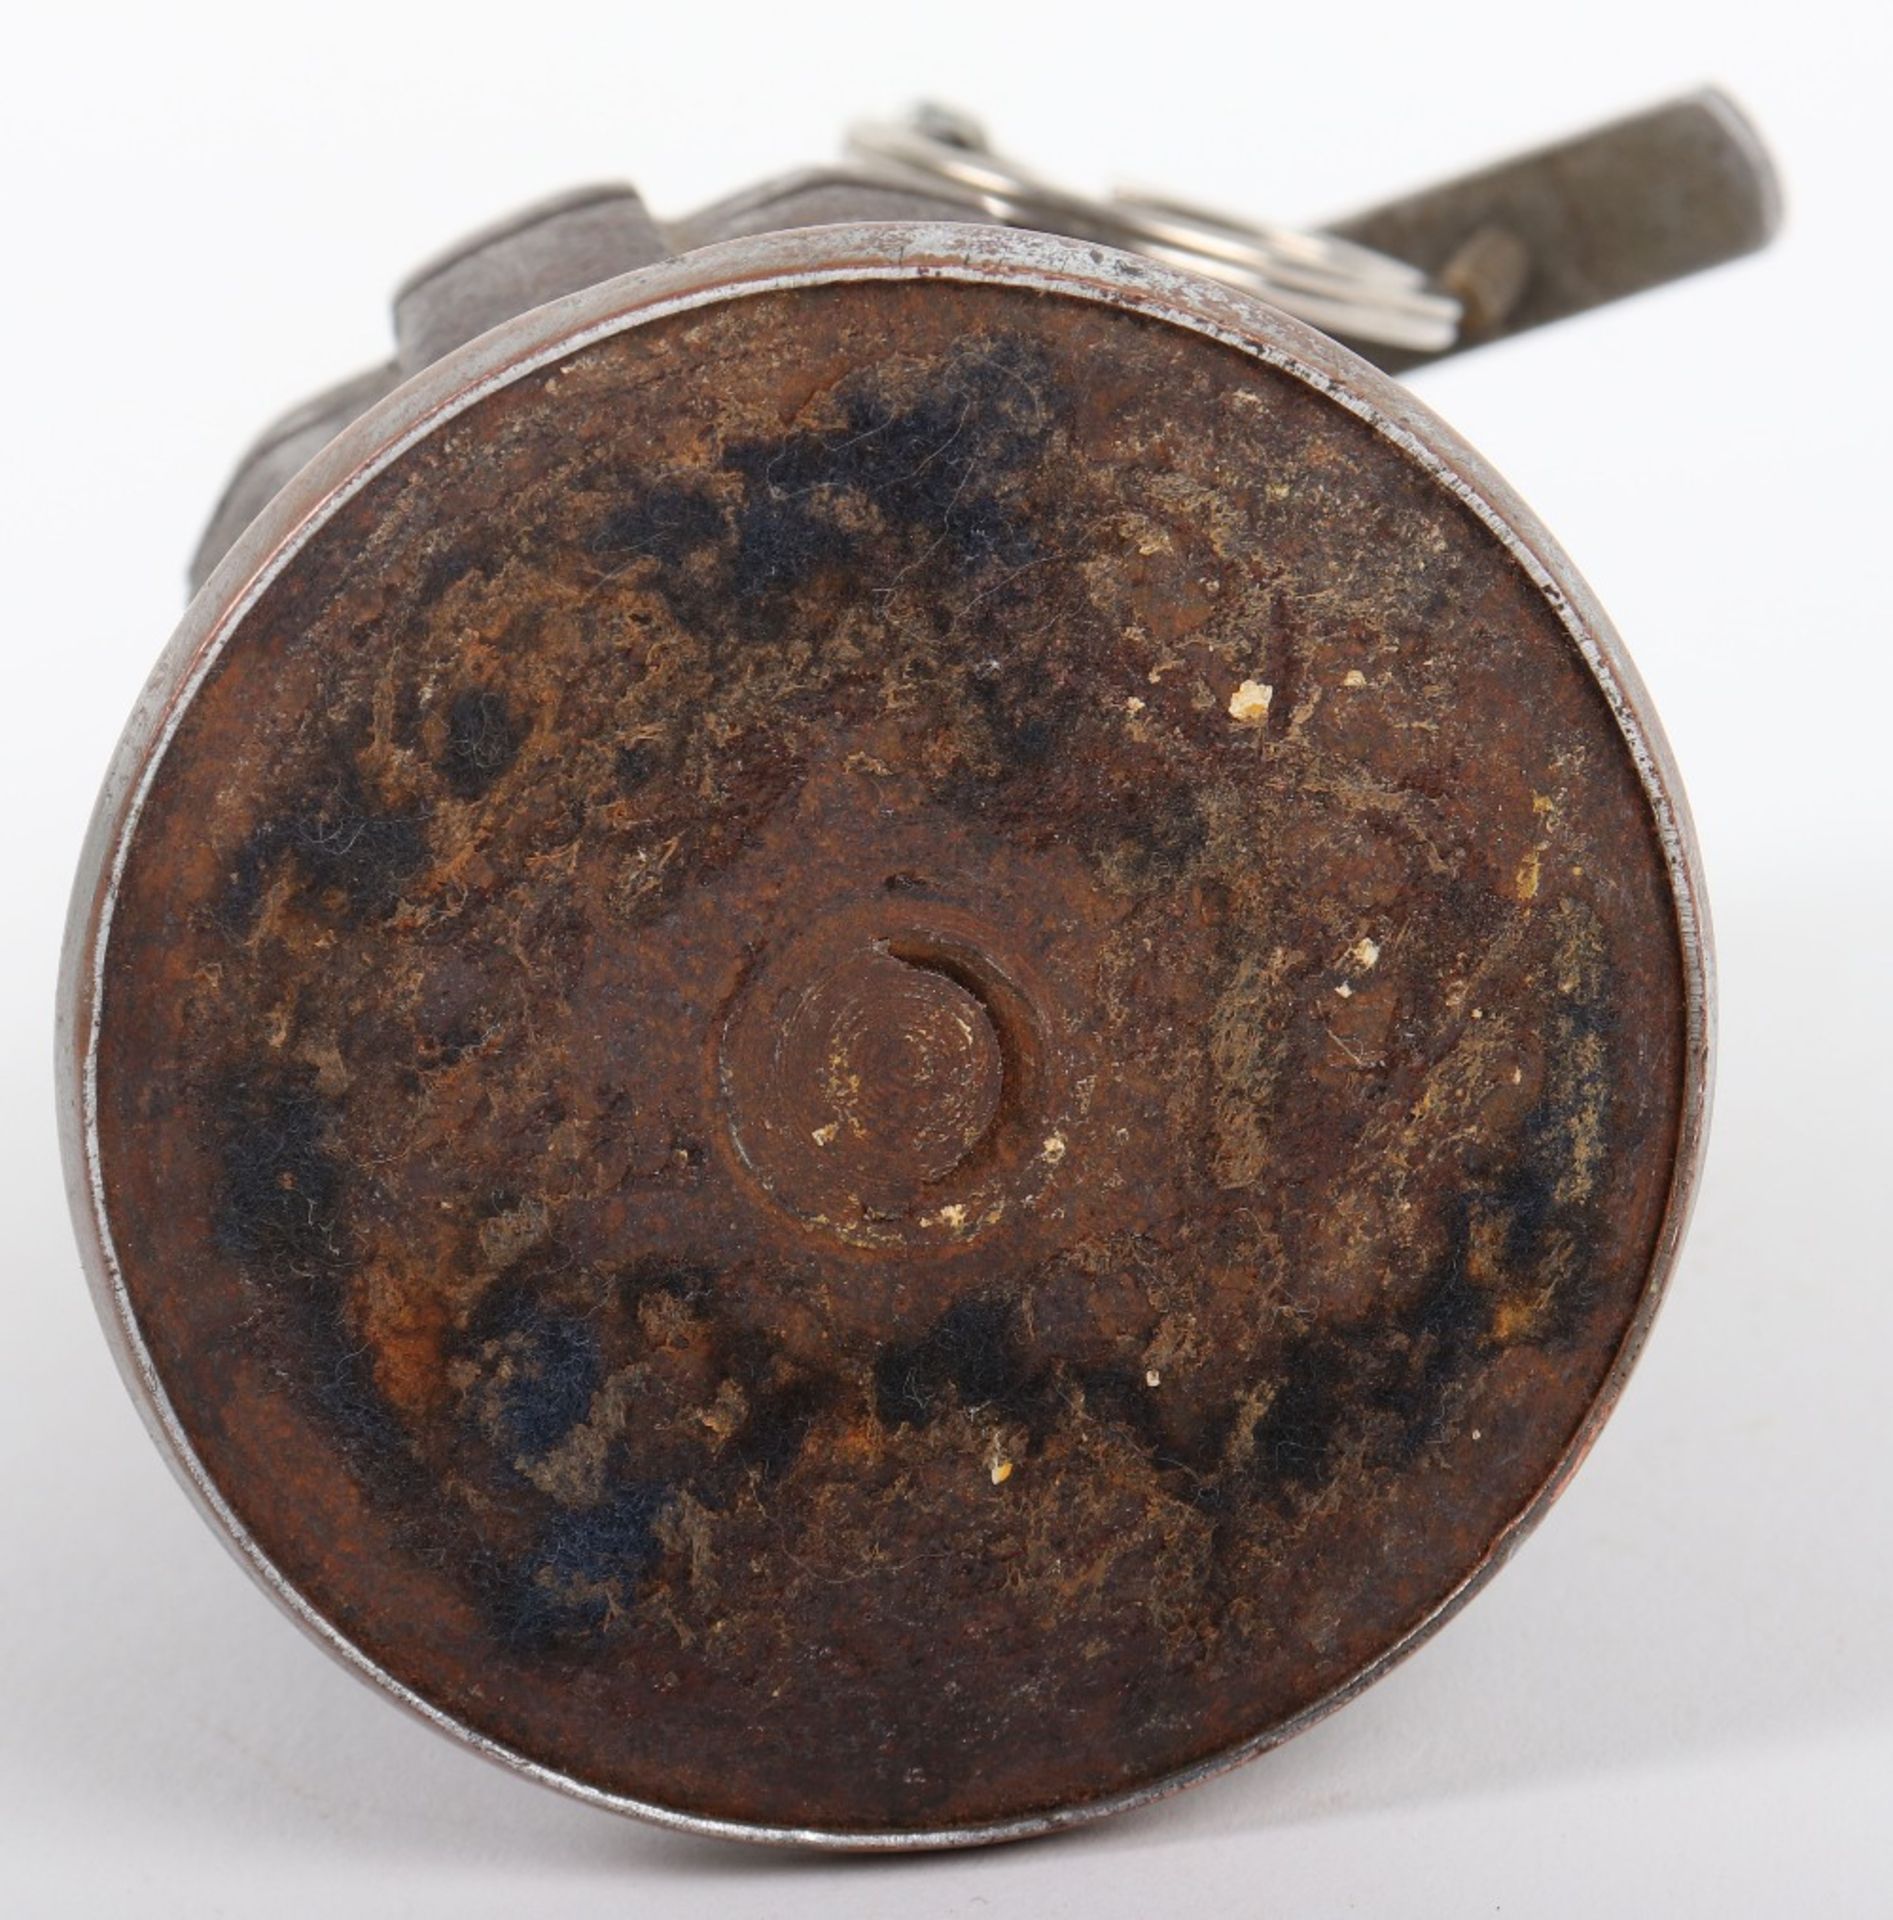 Inert British Mills Grenade Converted to Table Lighter - Image 6 of 6